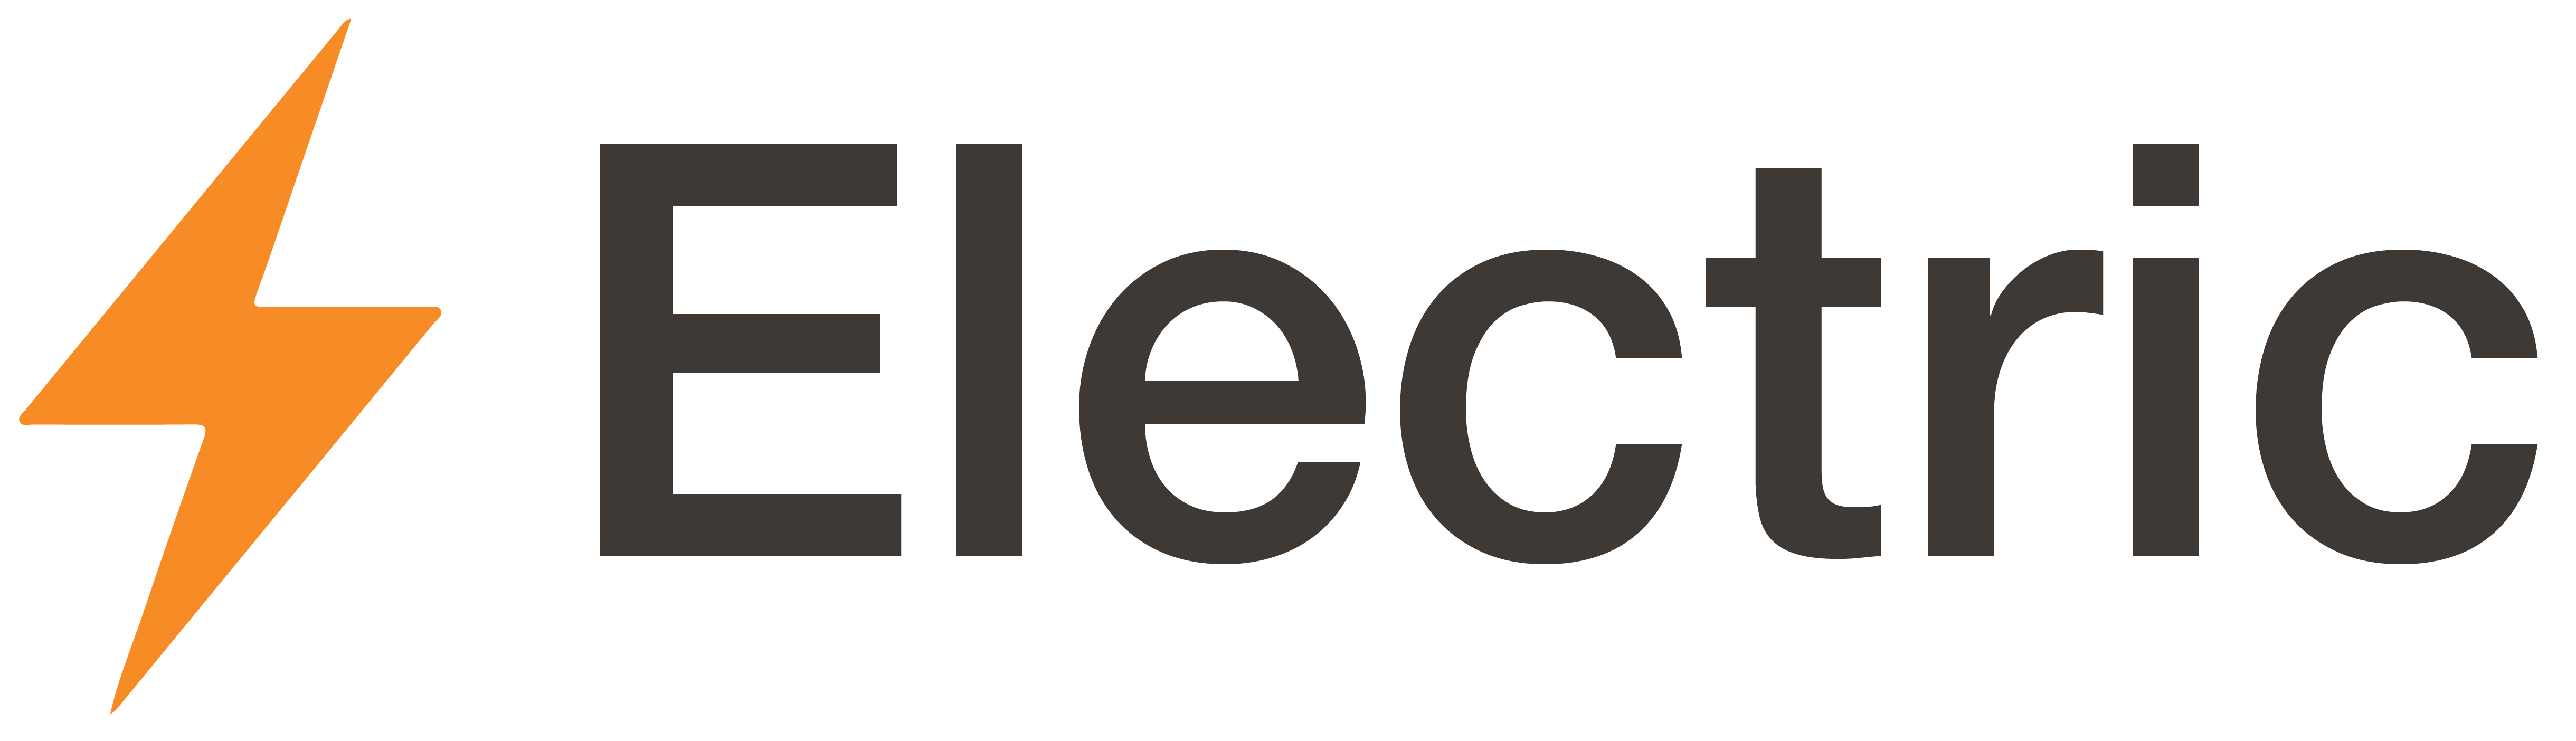 The Electric Logo - Energy savings